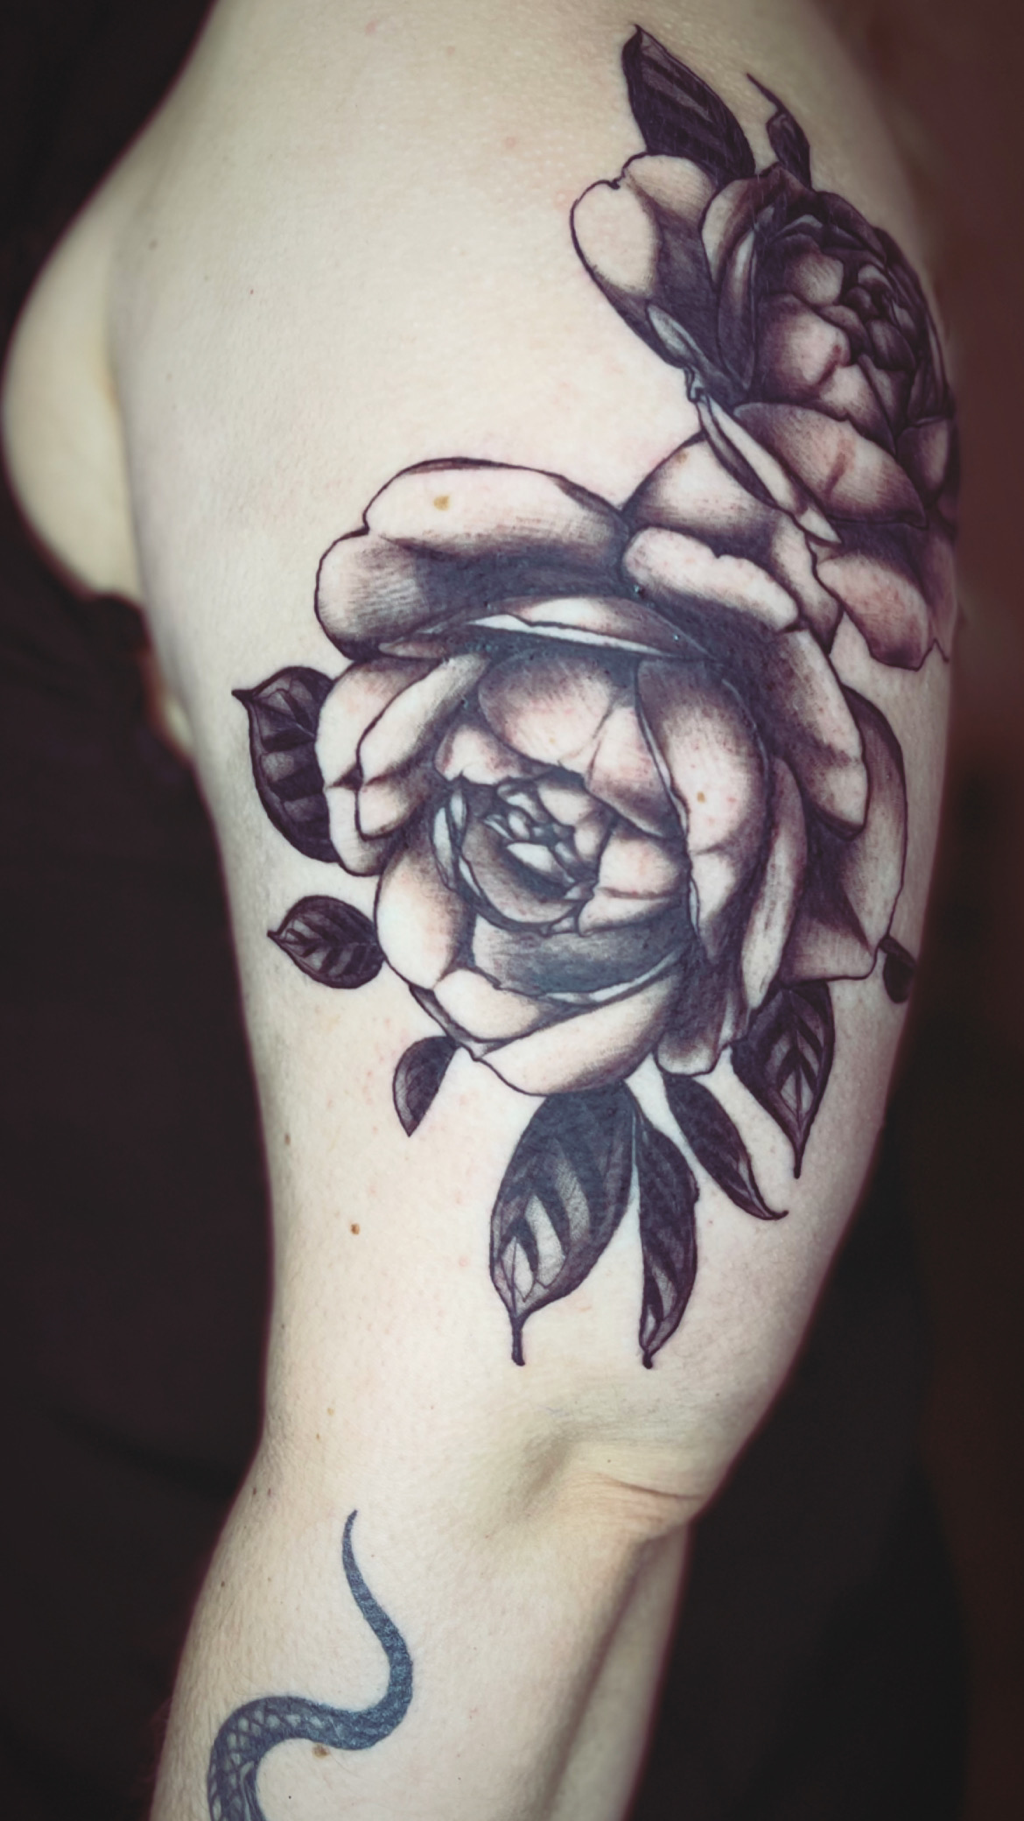 Tattoos After 50 :) - New Rose Tattoo in Portland Oregon